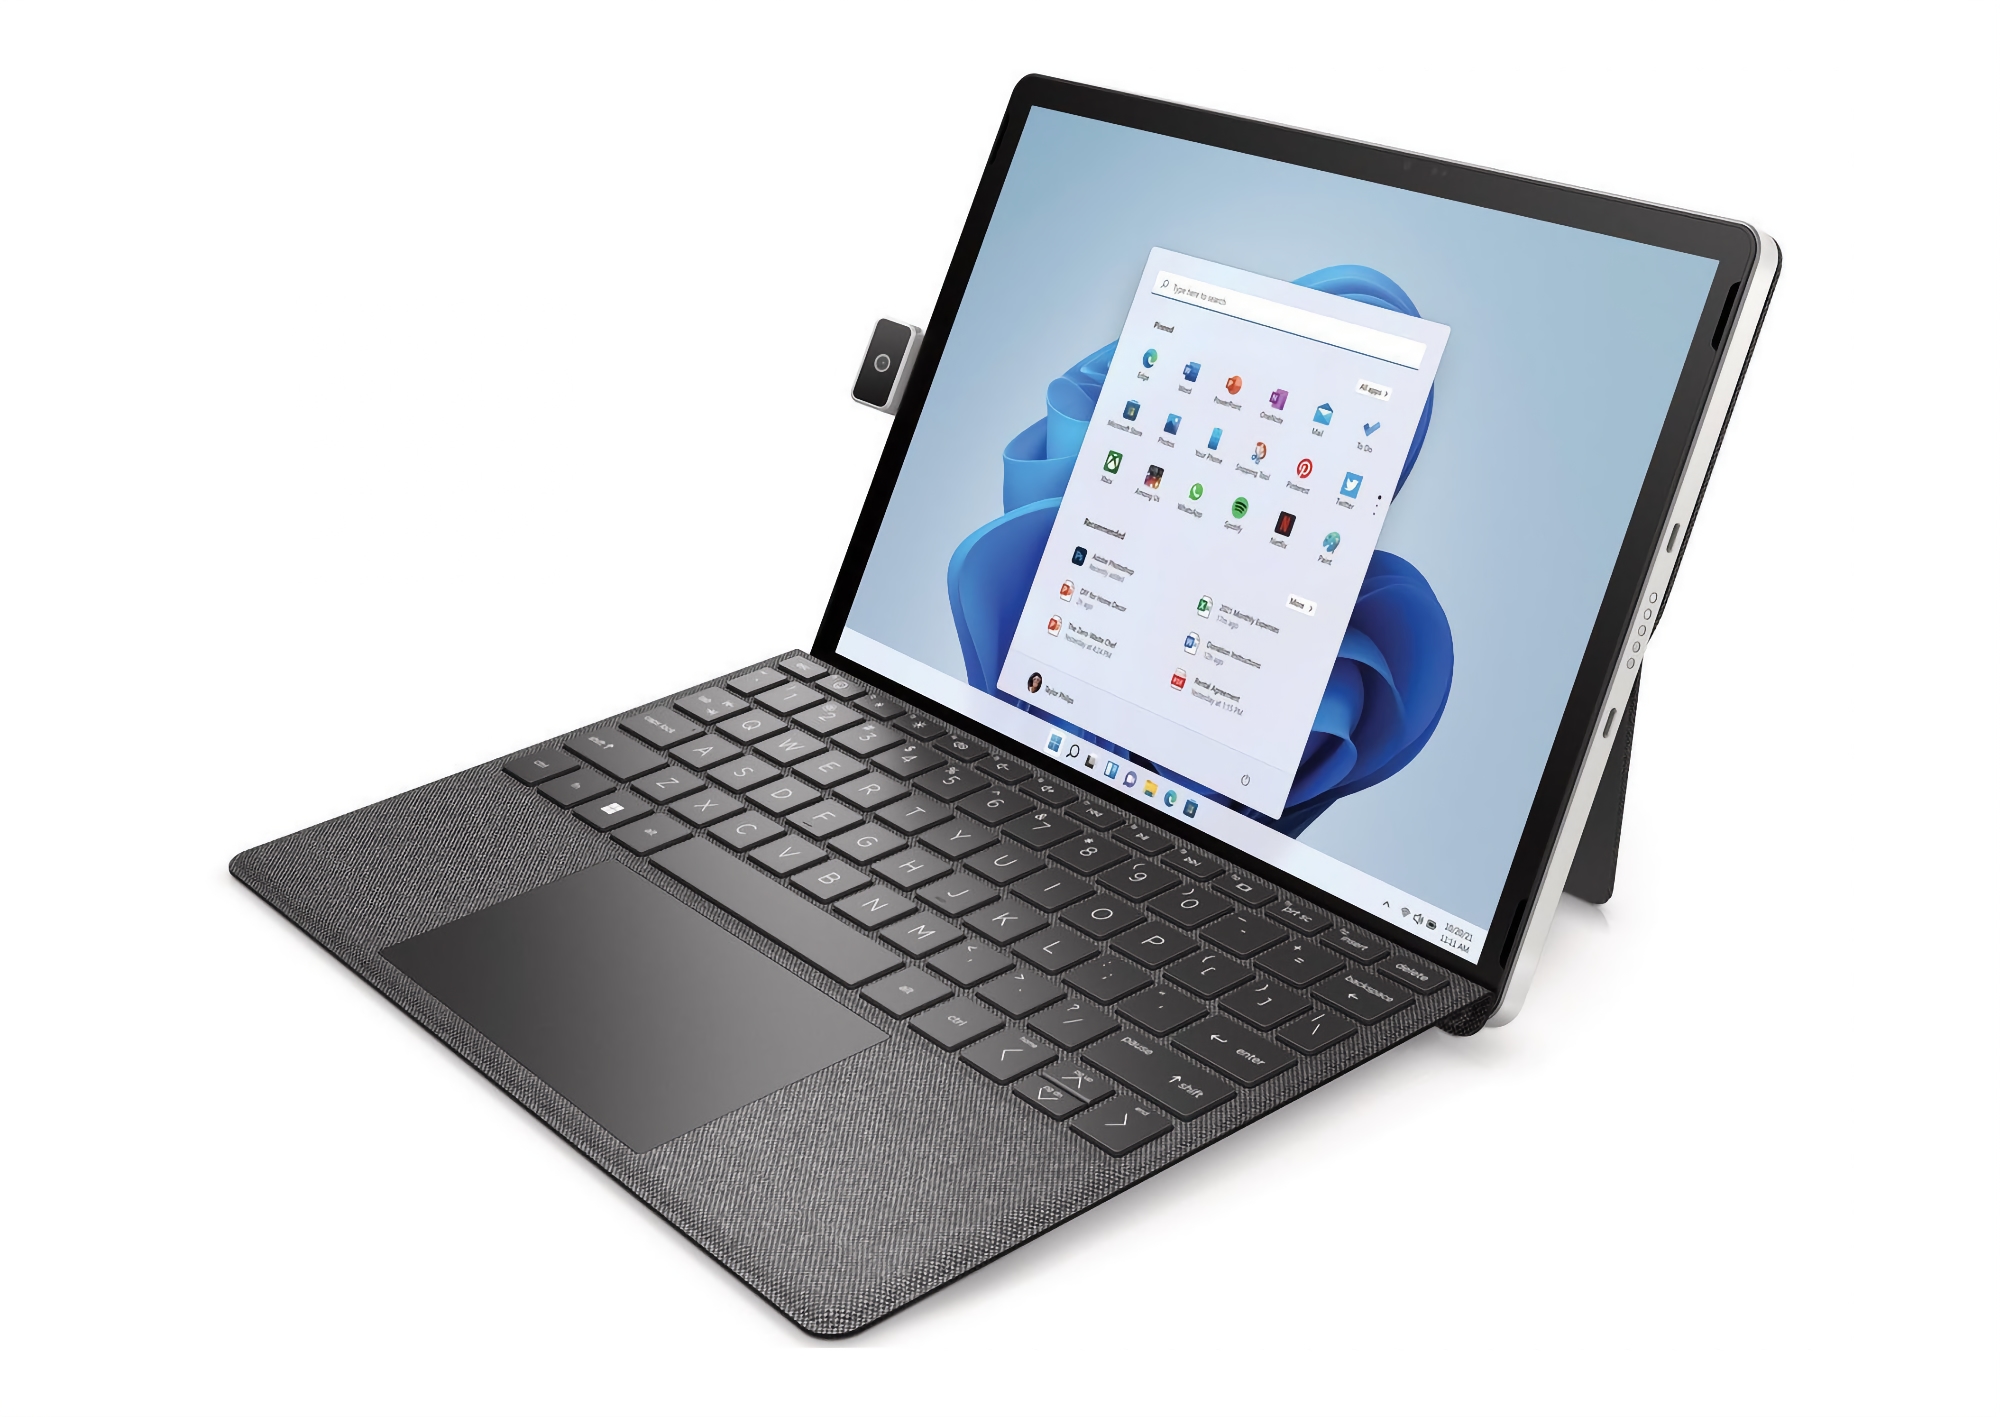 HP's new 8-inch Windows 10 tablet rocks a USB-C port